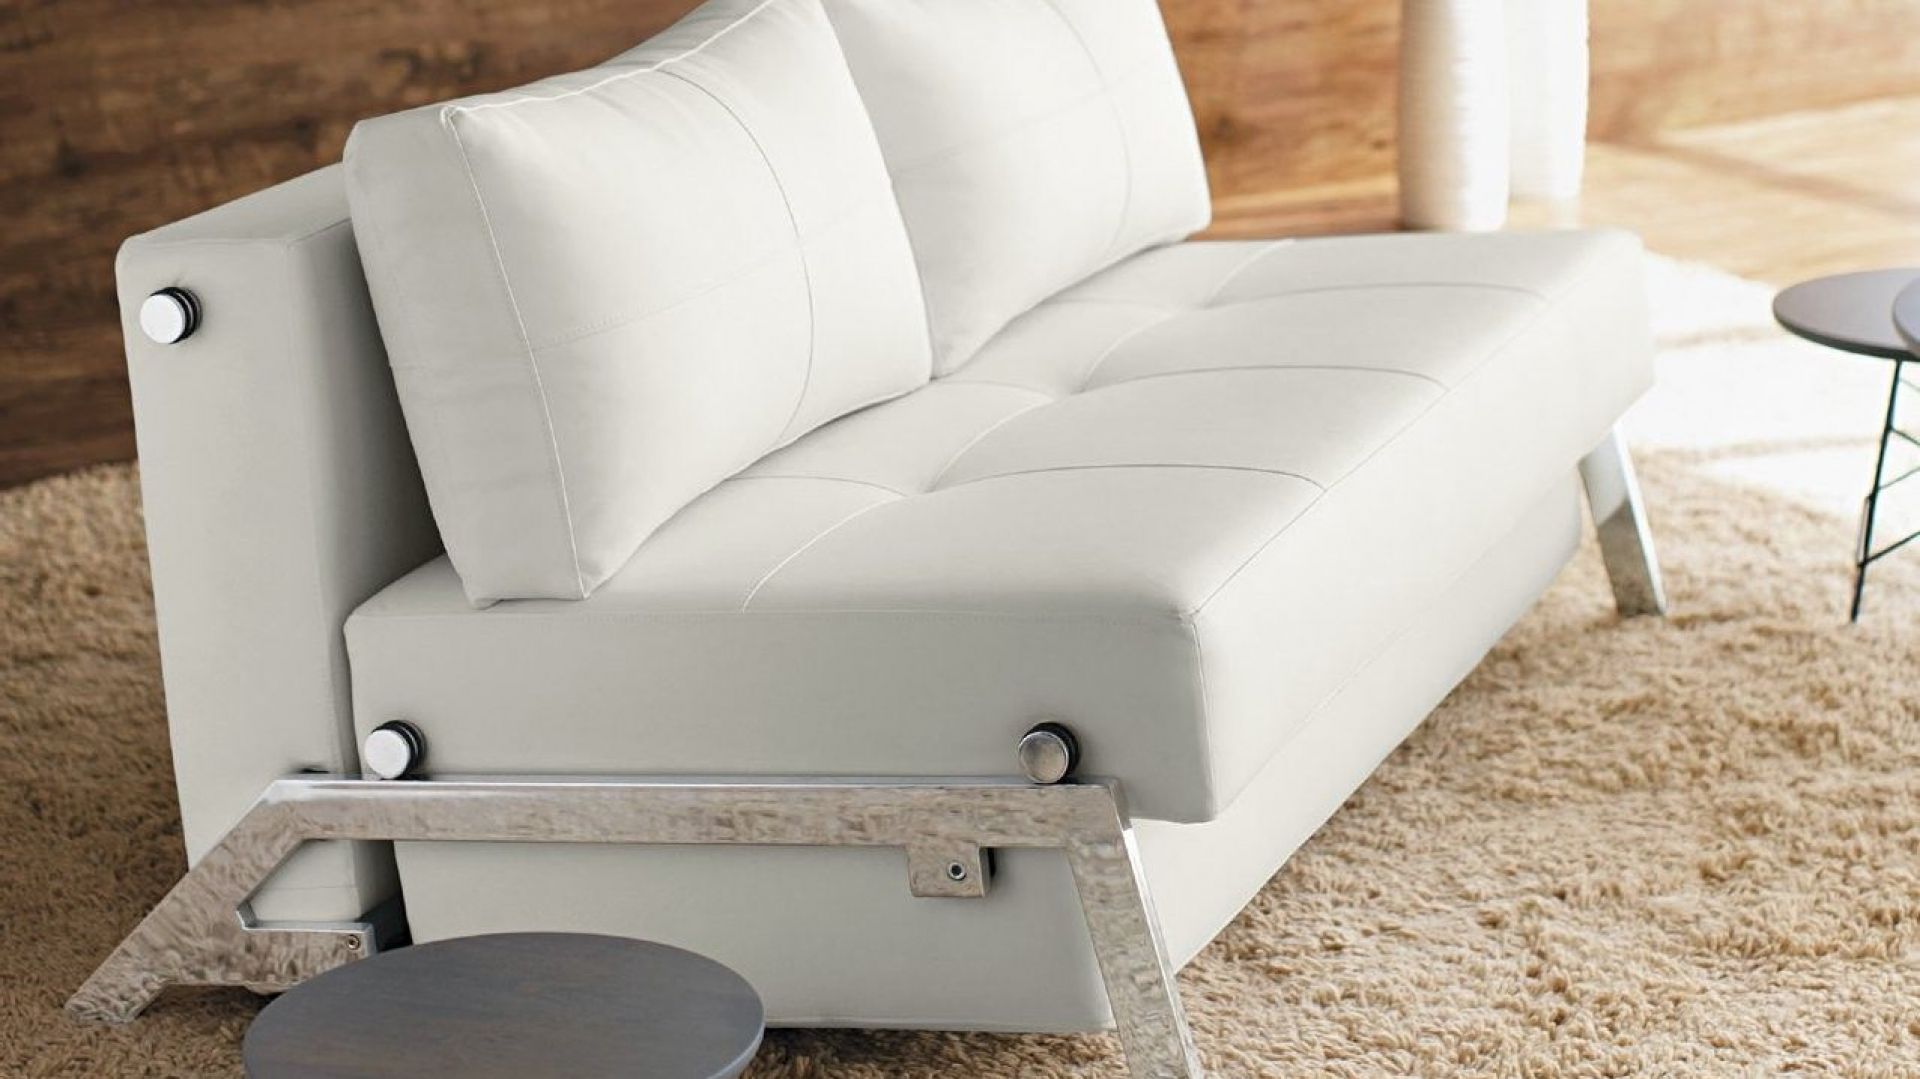 Sofa "Cubed" - design w rozkładanej formie